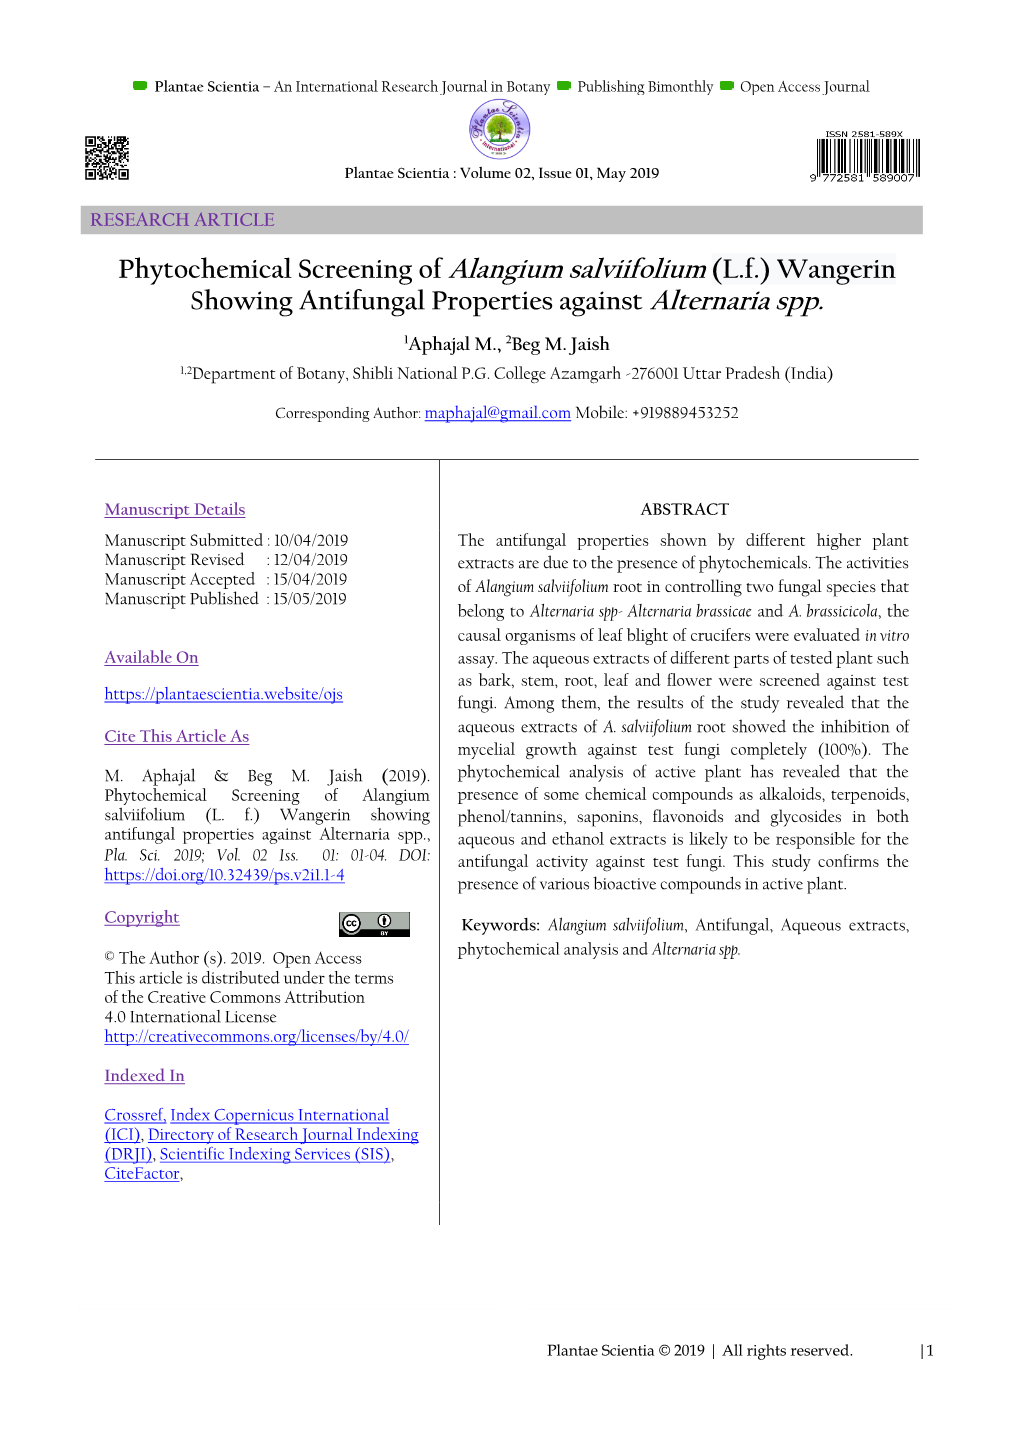 Phytochemical Screening of Alangium Salviifolium (L.F.) Wangerin Showing Antifungal Properties Against Alternaria Spp